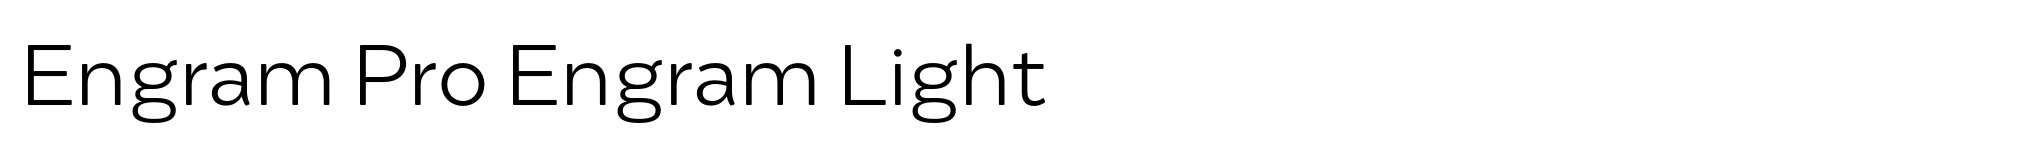 Engram Pro Engram Light image